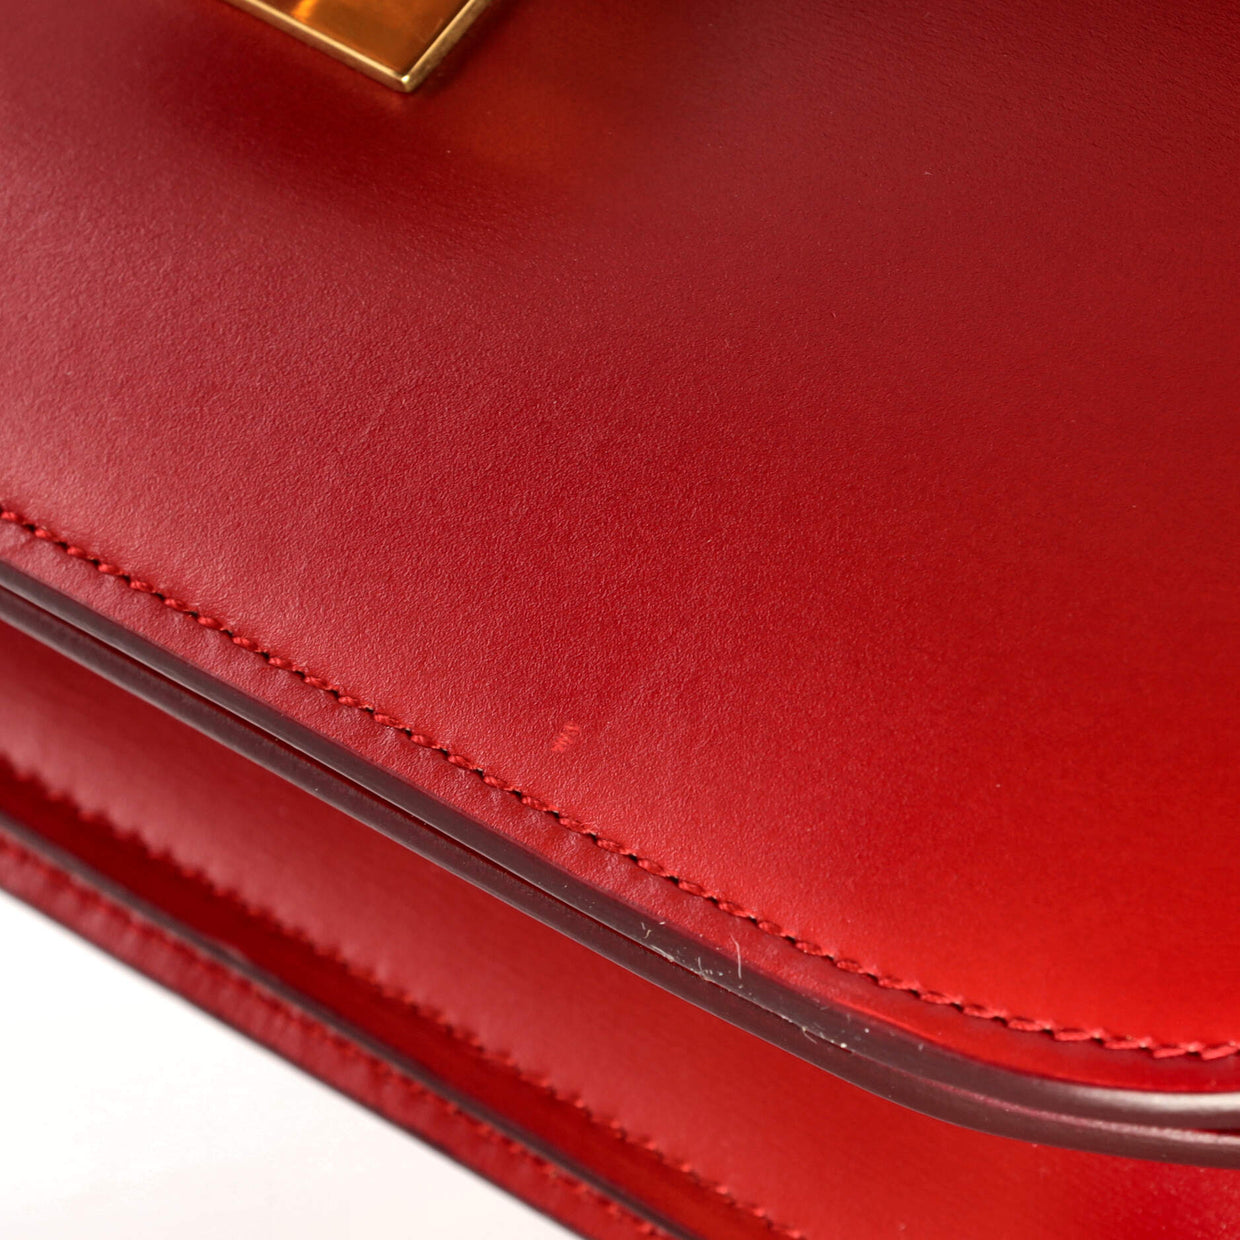 Celine Classic Box Bag Smooth Leather Medium Red 2282935